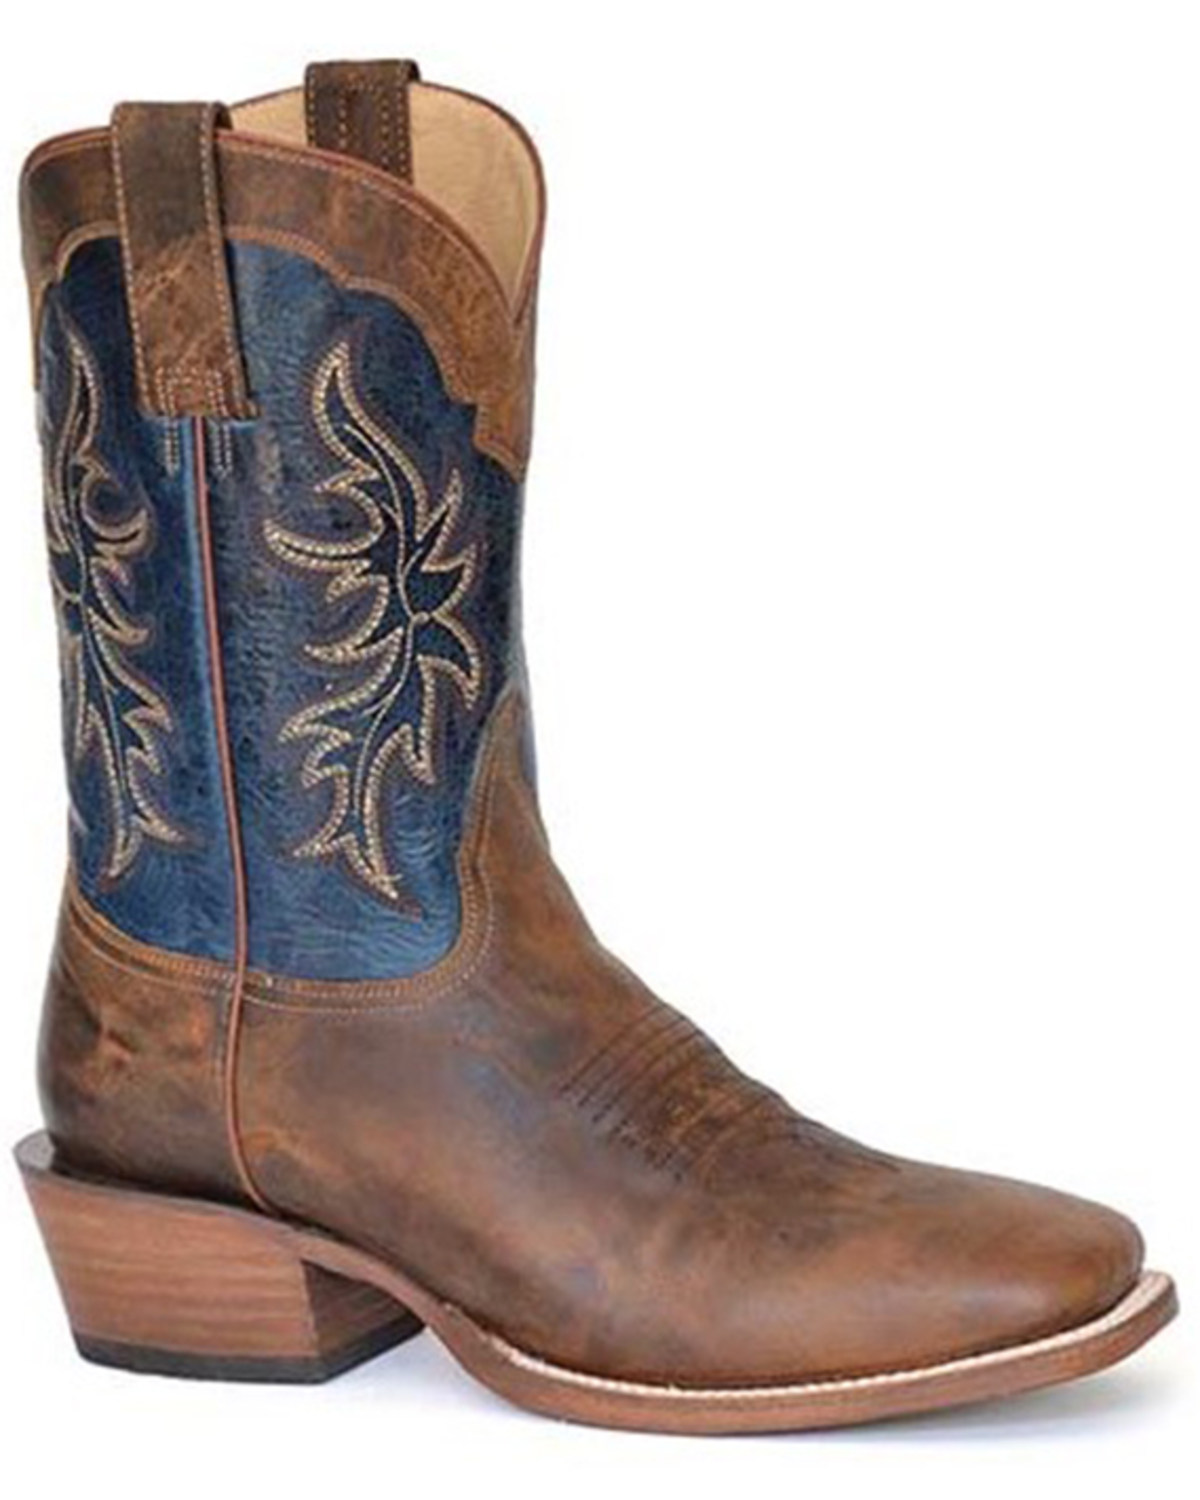 Roper Men's Rideem Cowboy Western Boots - Broad Square Toe